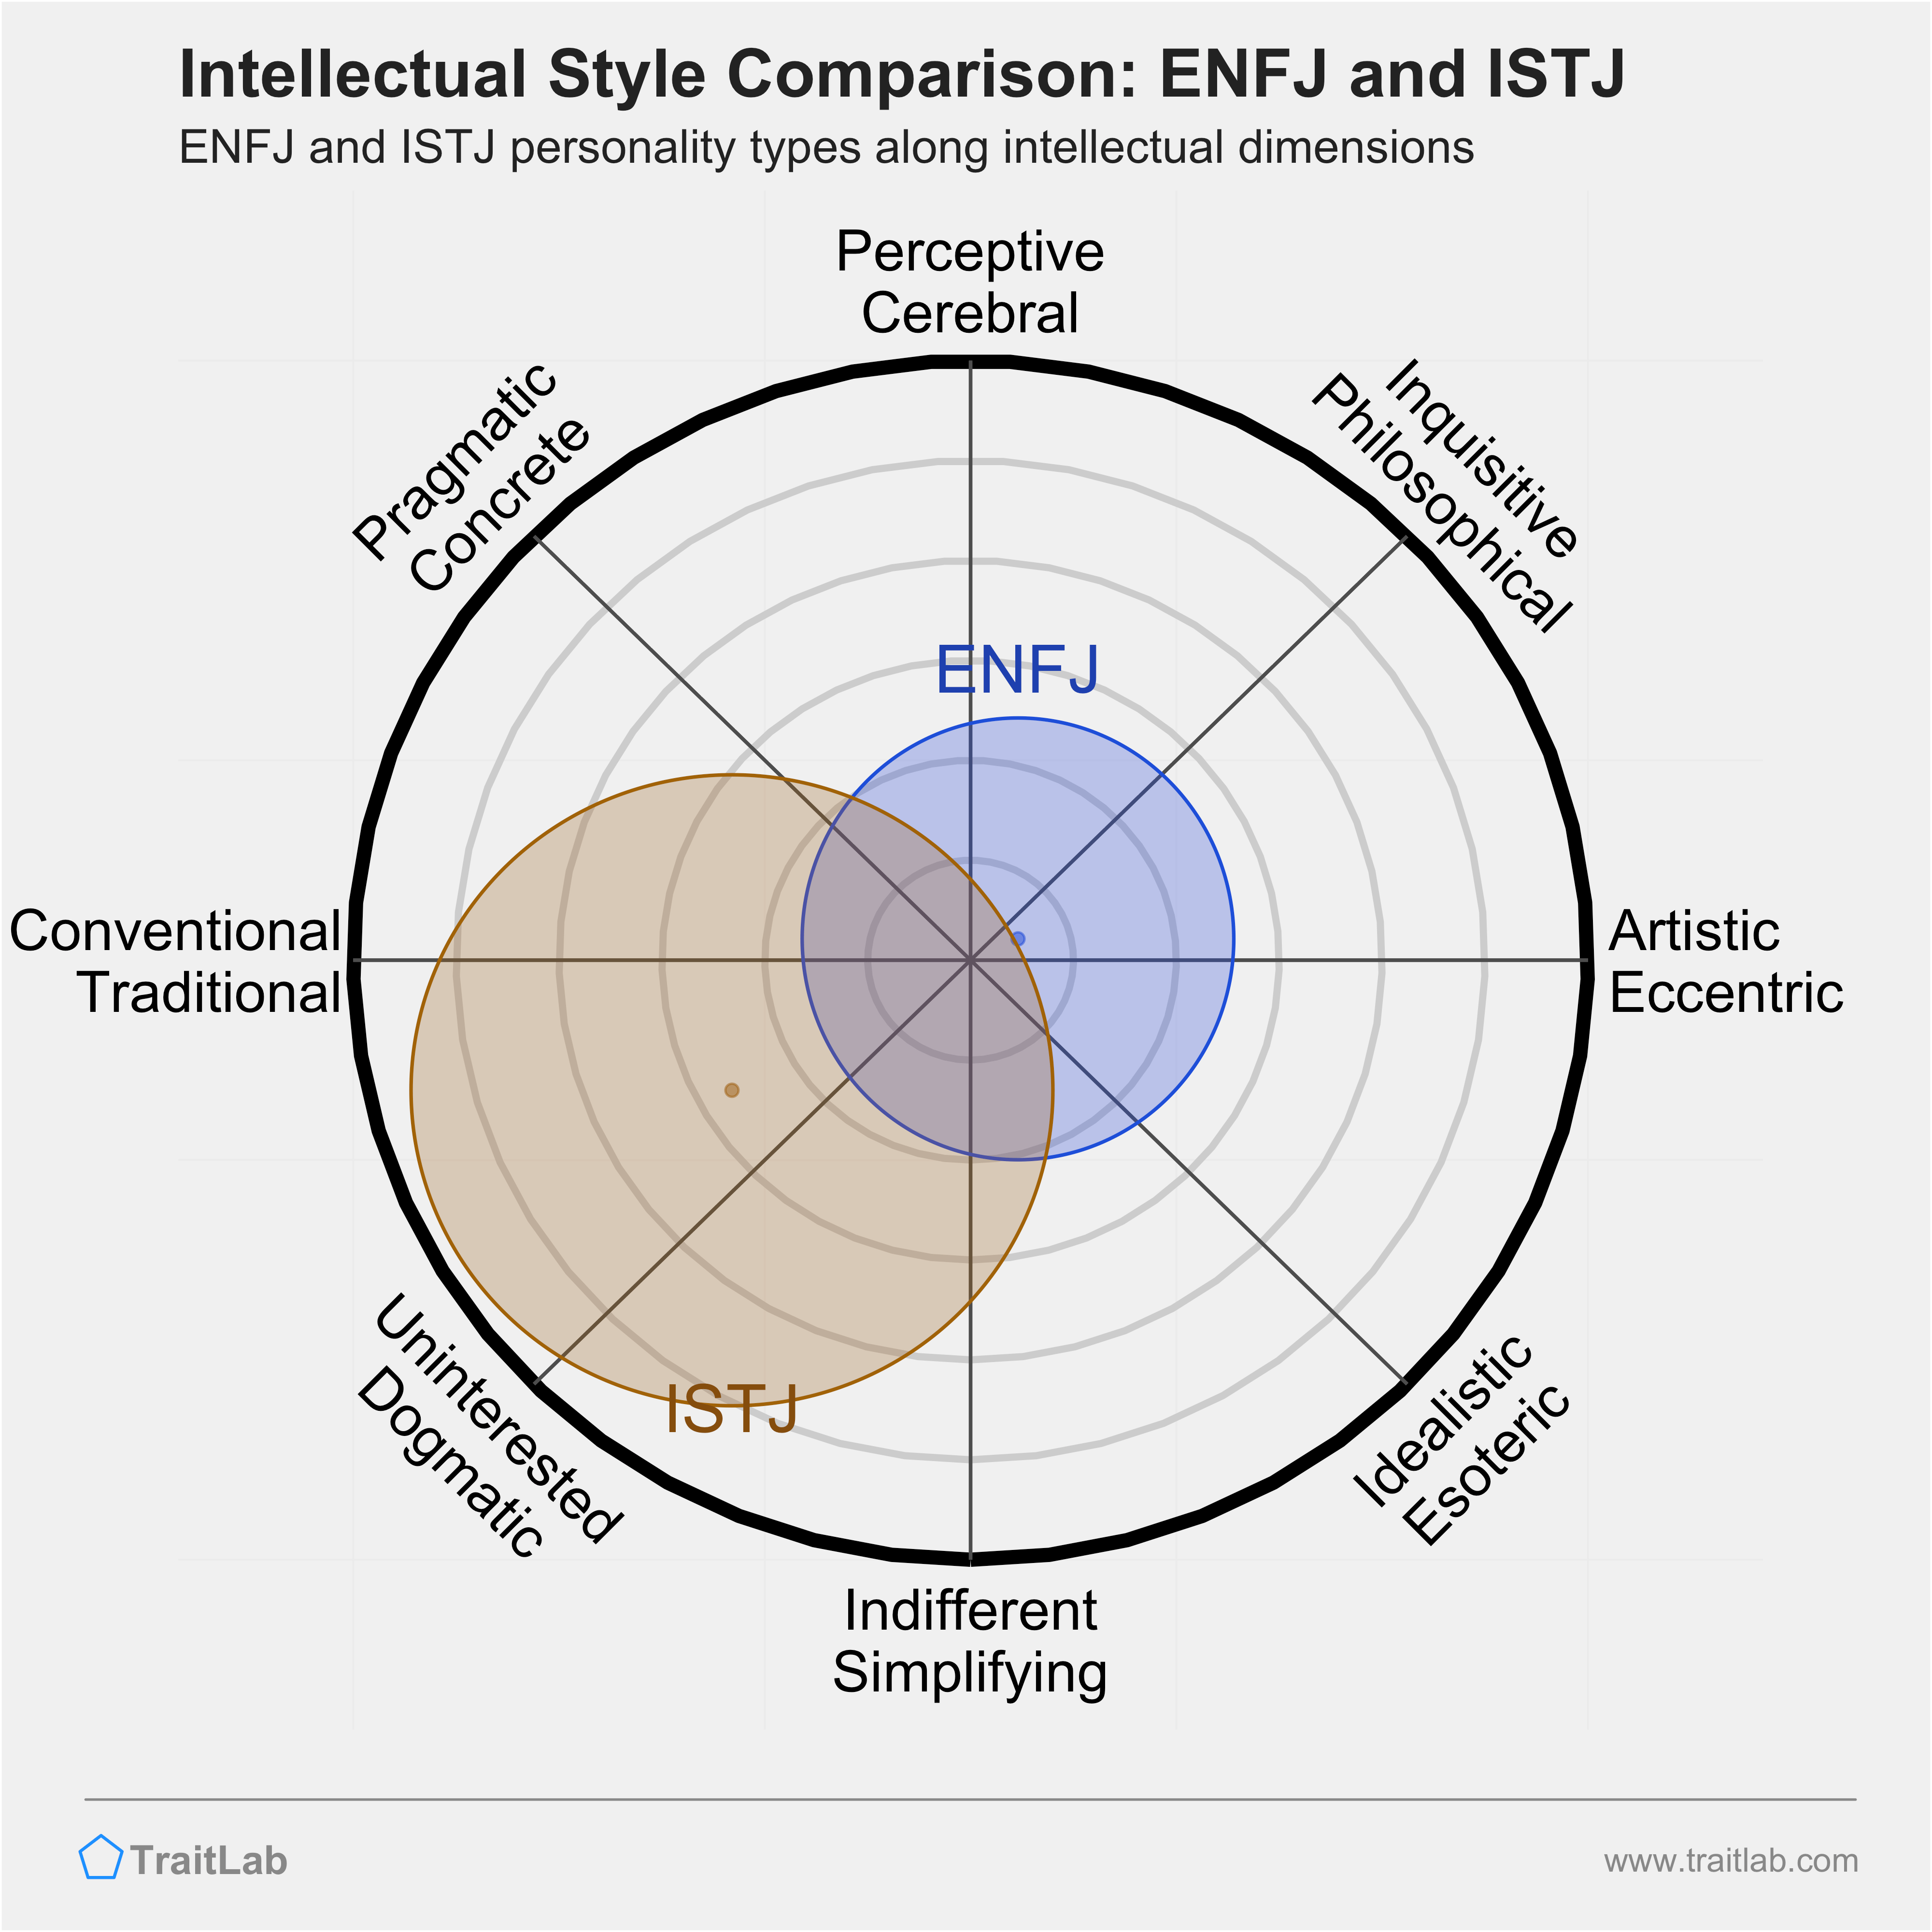 ENFJ and ISTJ comparison across intellectual dimensions